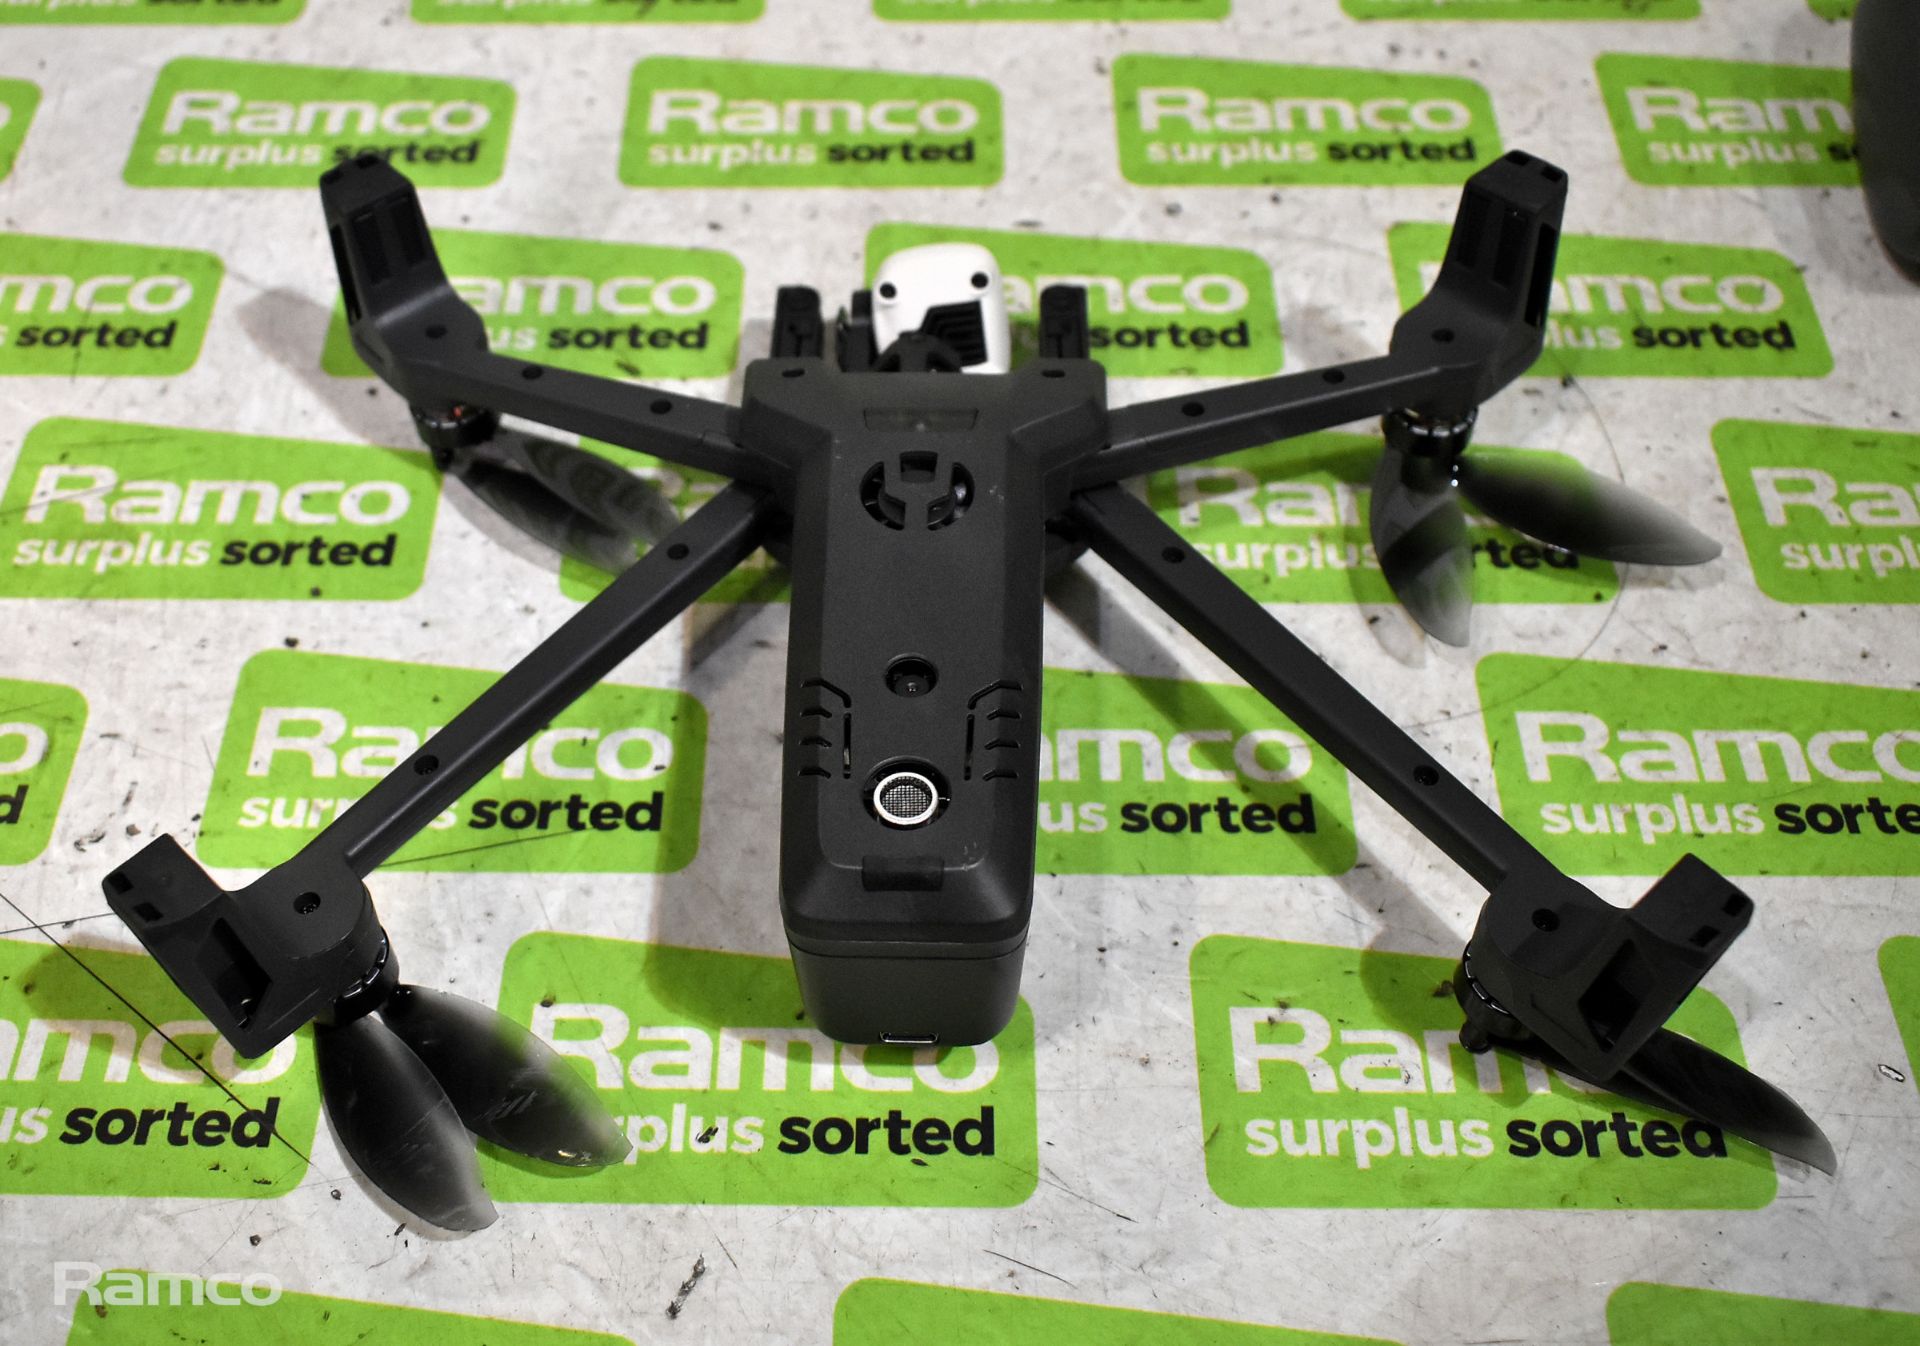 Parrot ANAFI ultra compact 4K HDR camera drone - Parrot SkyController 3 handset - 4x 2700mAh 7.6V - Bild 6 aus 12